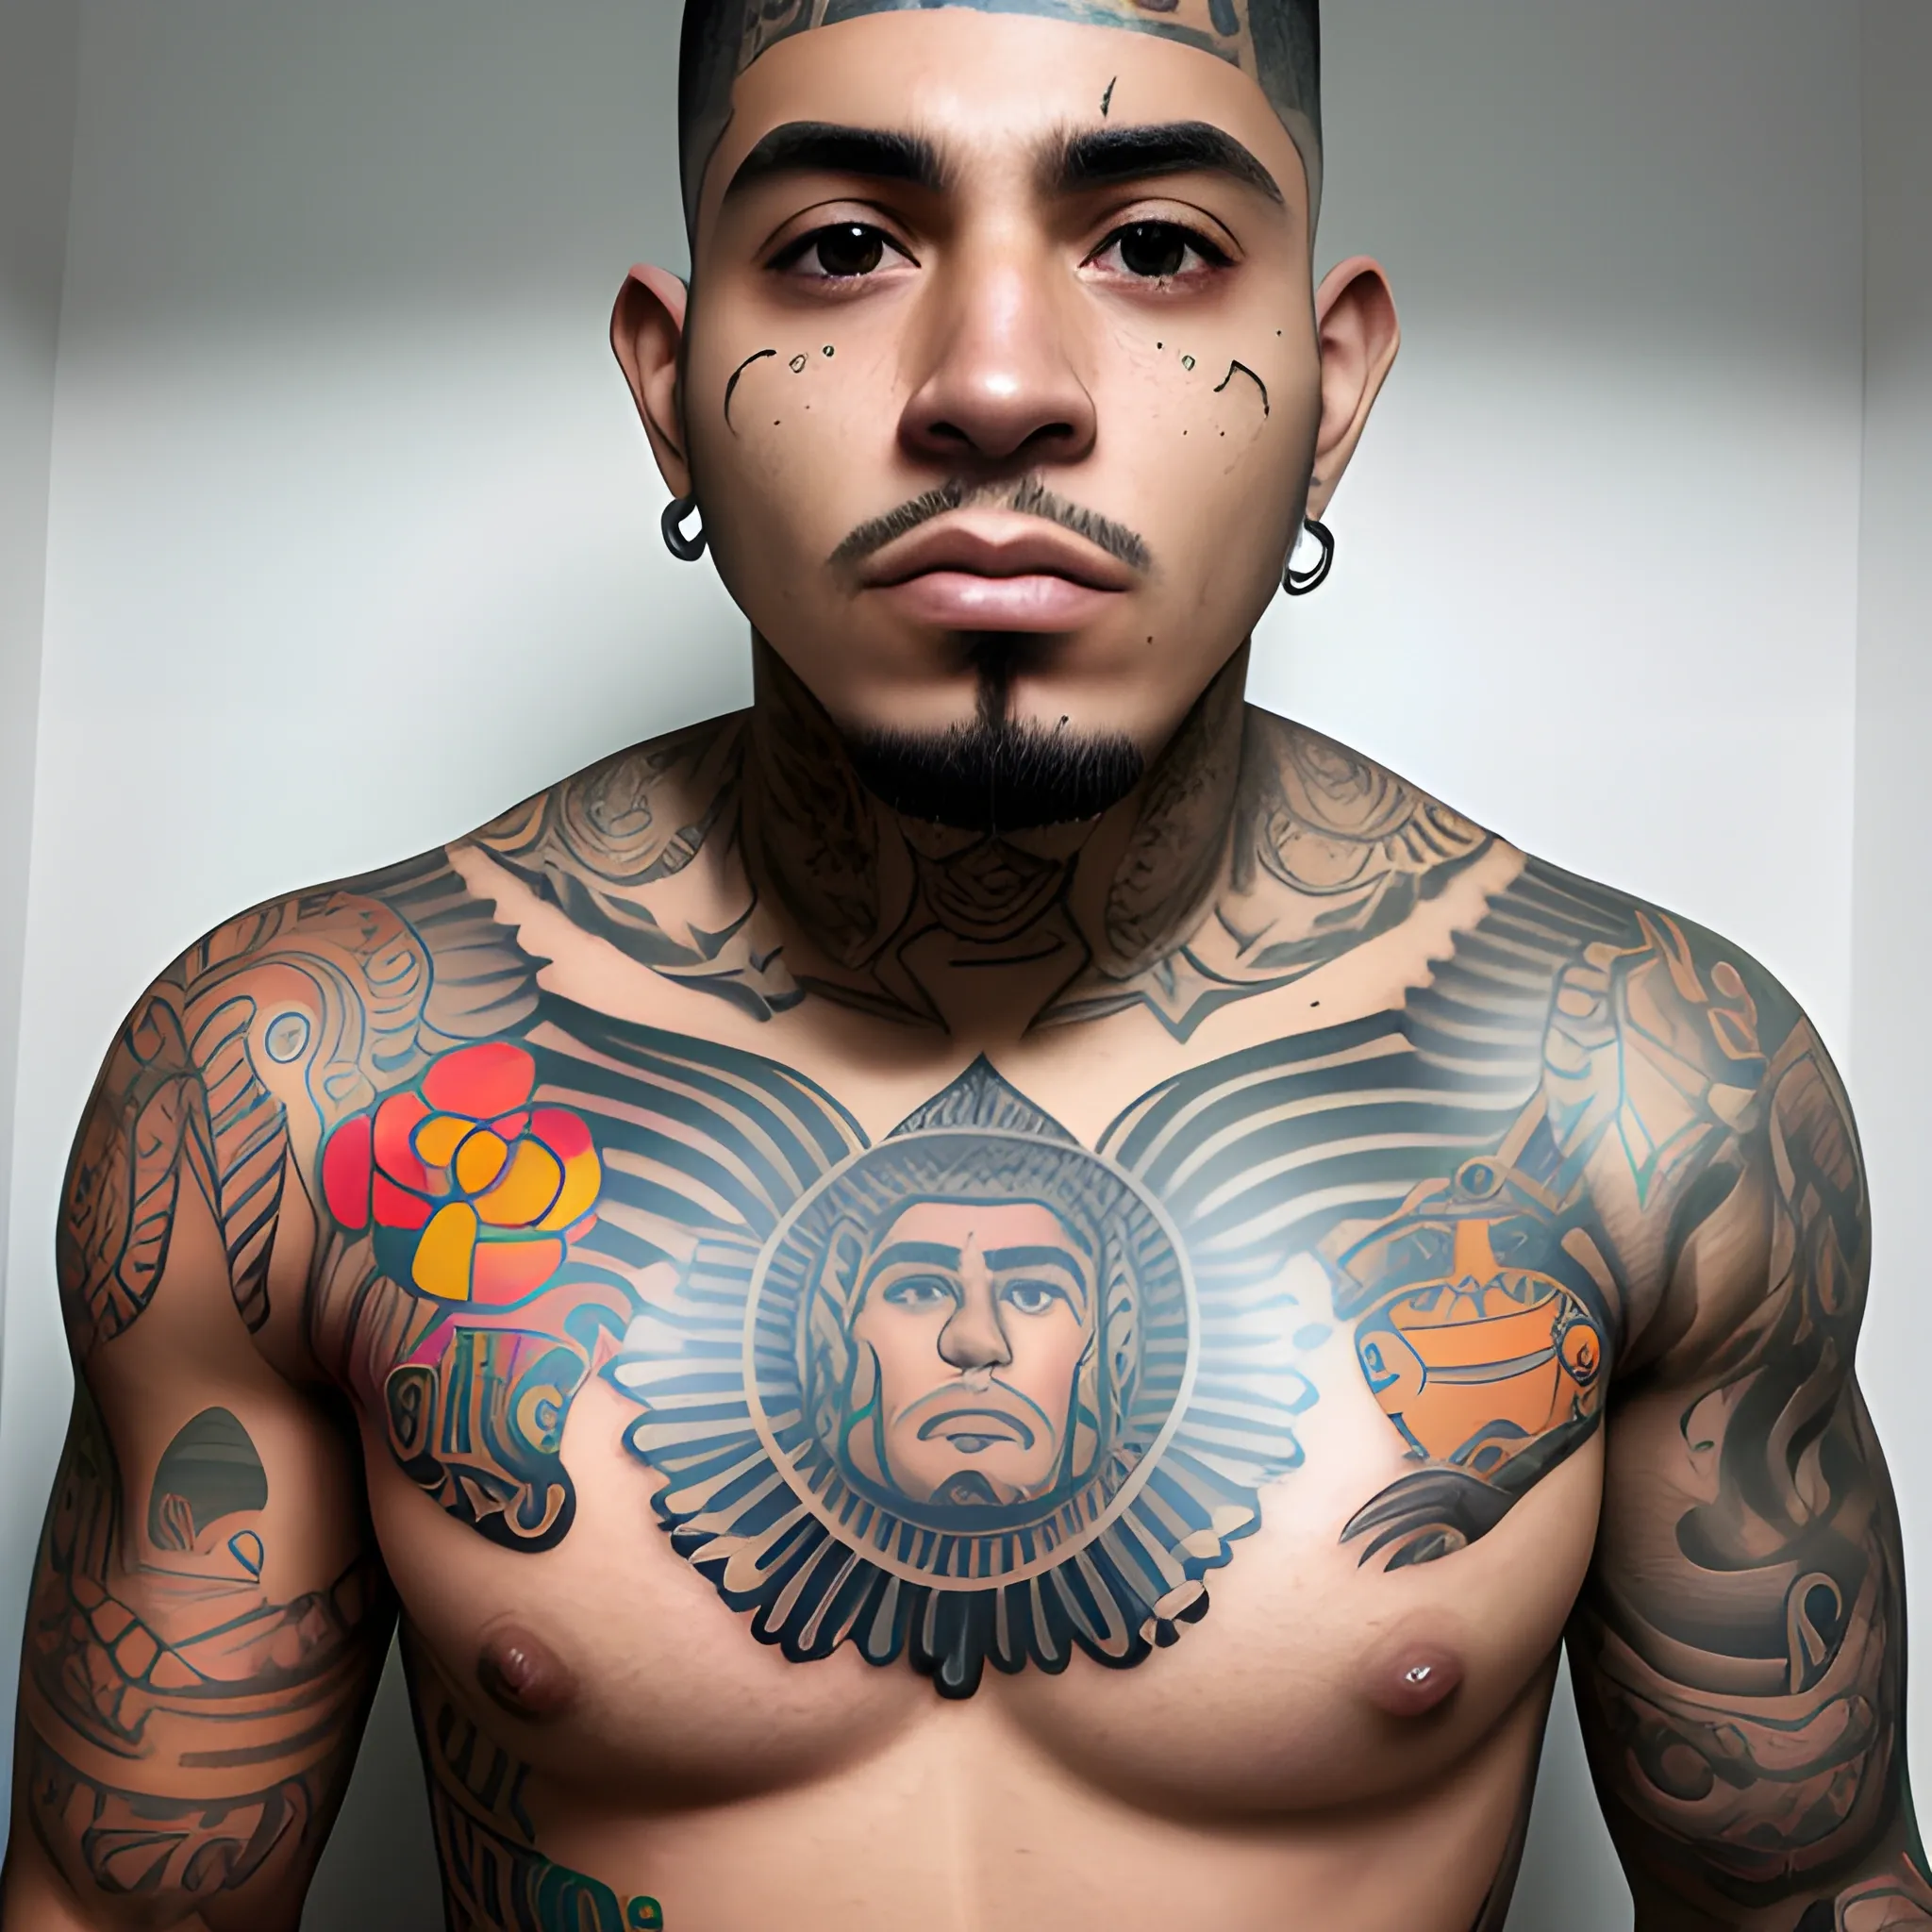 Latin colombian man face tatto trap rap
CAMPA